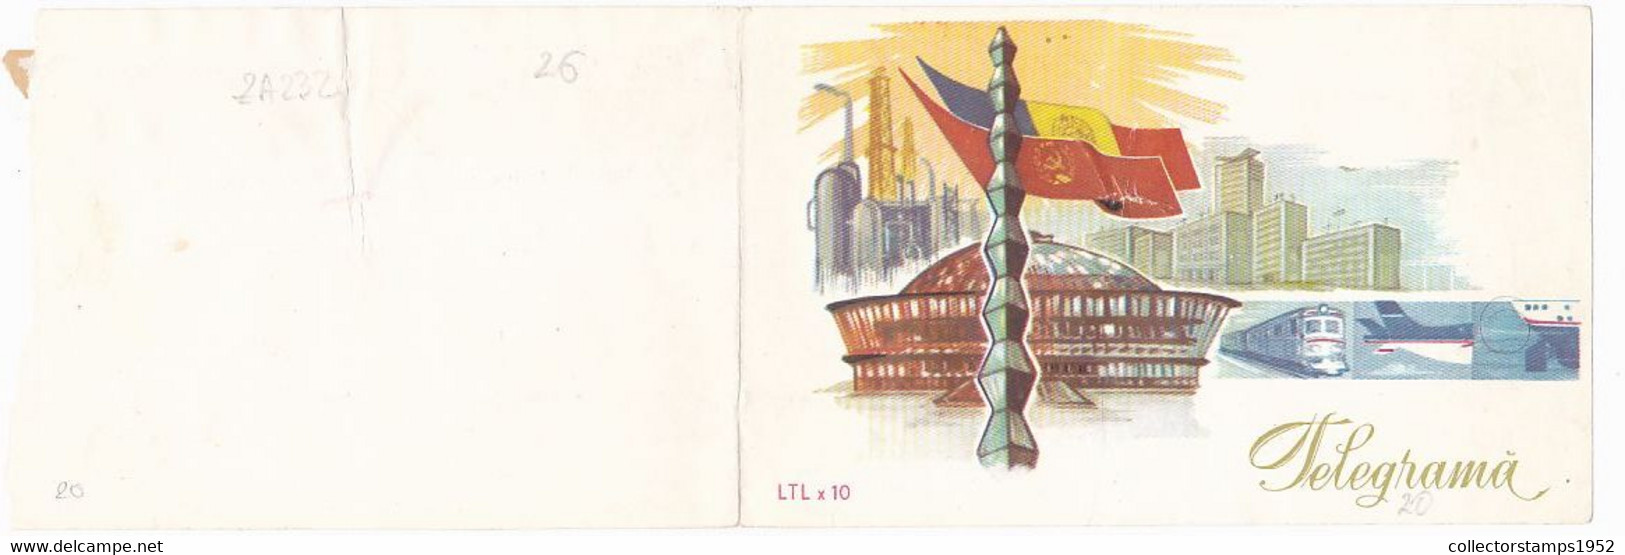 W7957- ROMANIAN SITES, EXHIBITION HALL, MONUMENT, TRAIN, PLANE, SHIP, TELEGRAMME, 1969, ROMANIA - Telegraaf